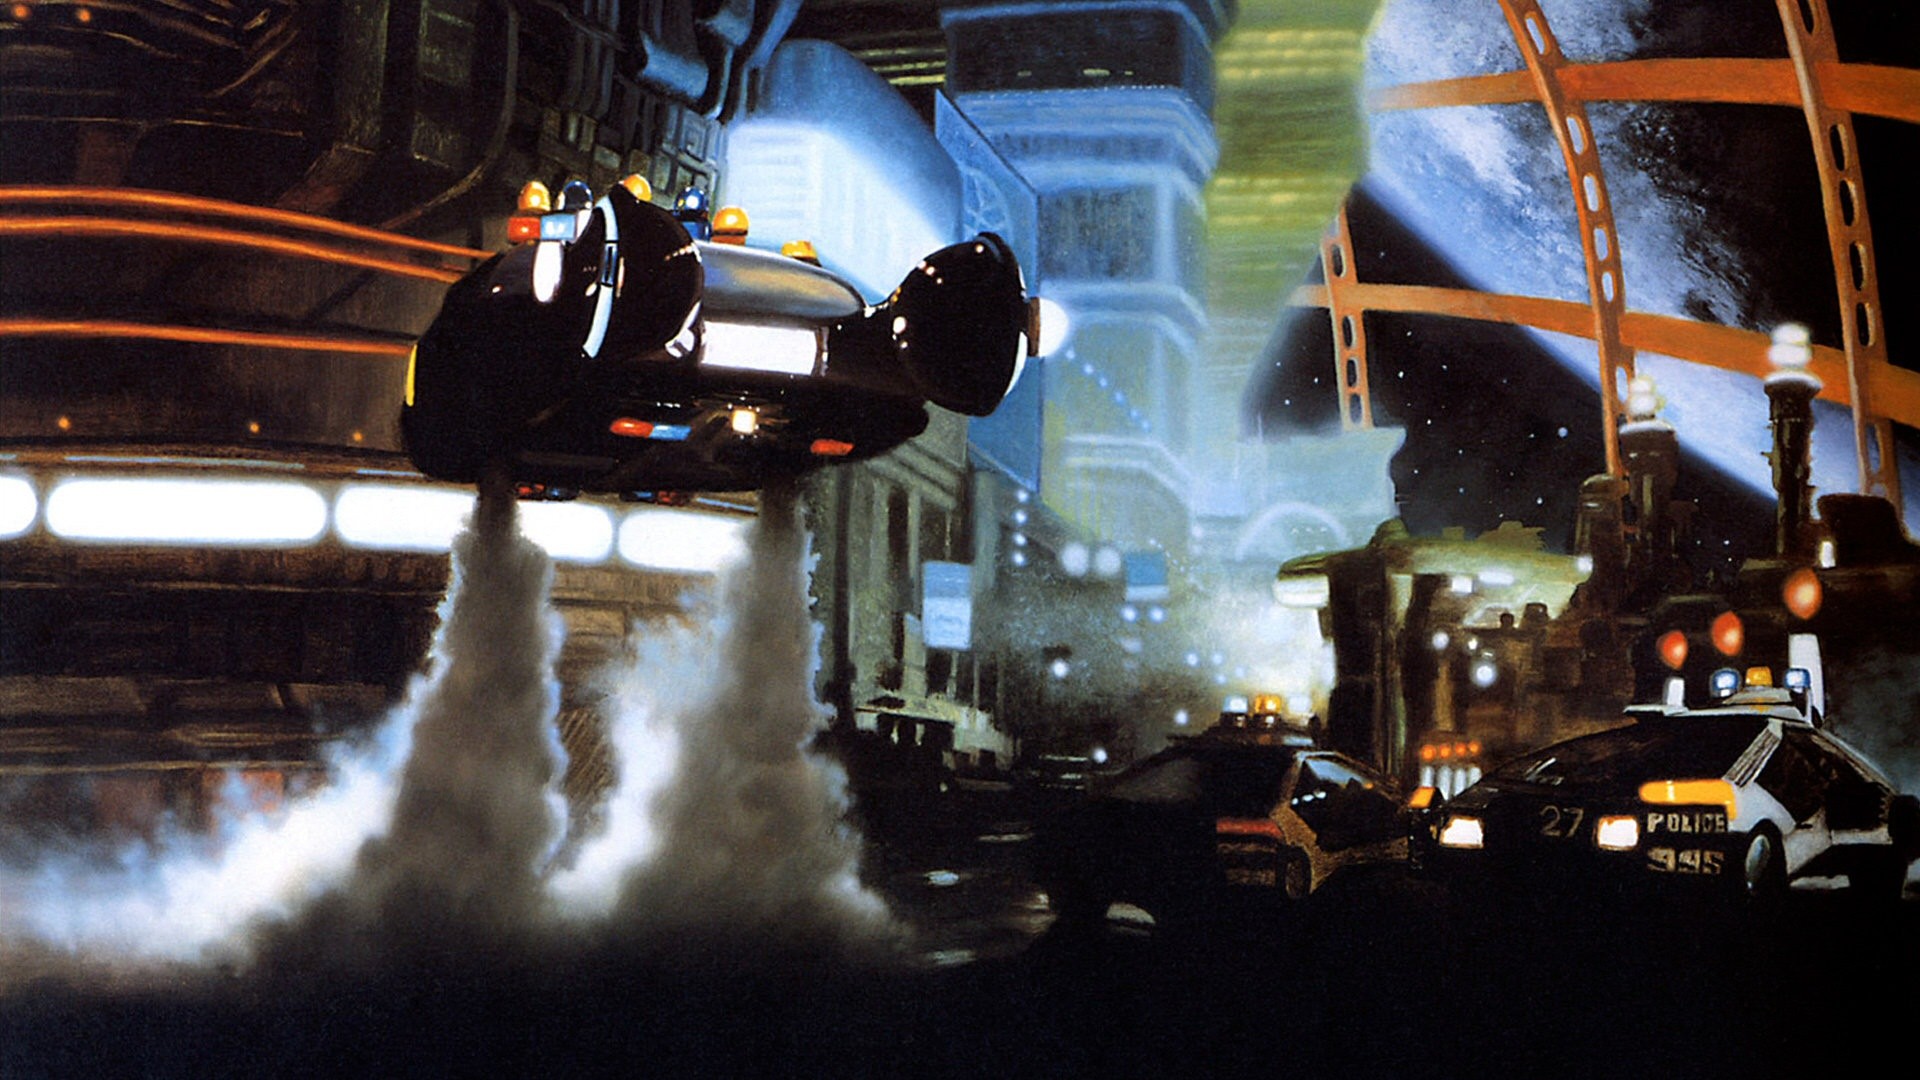 General 1920x1080 Blade Runner movies 1982 (Year) science fiction film stills vehicle